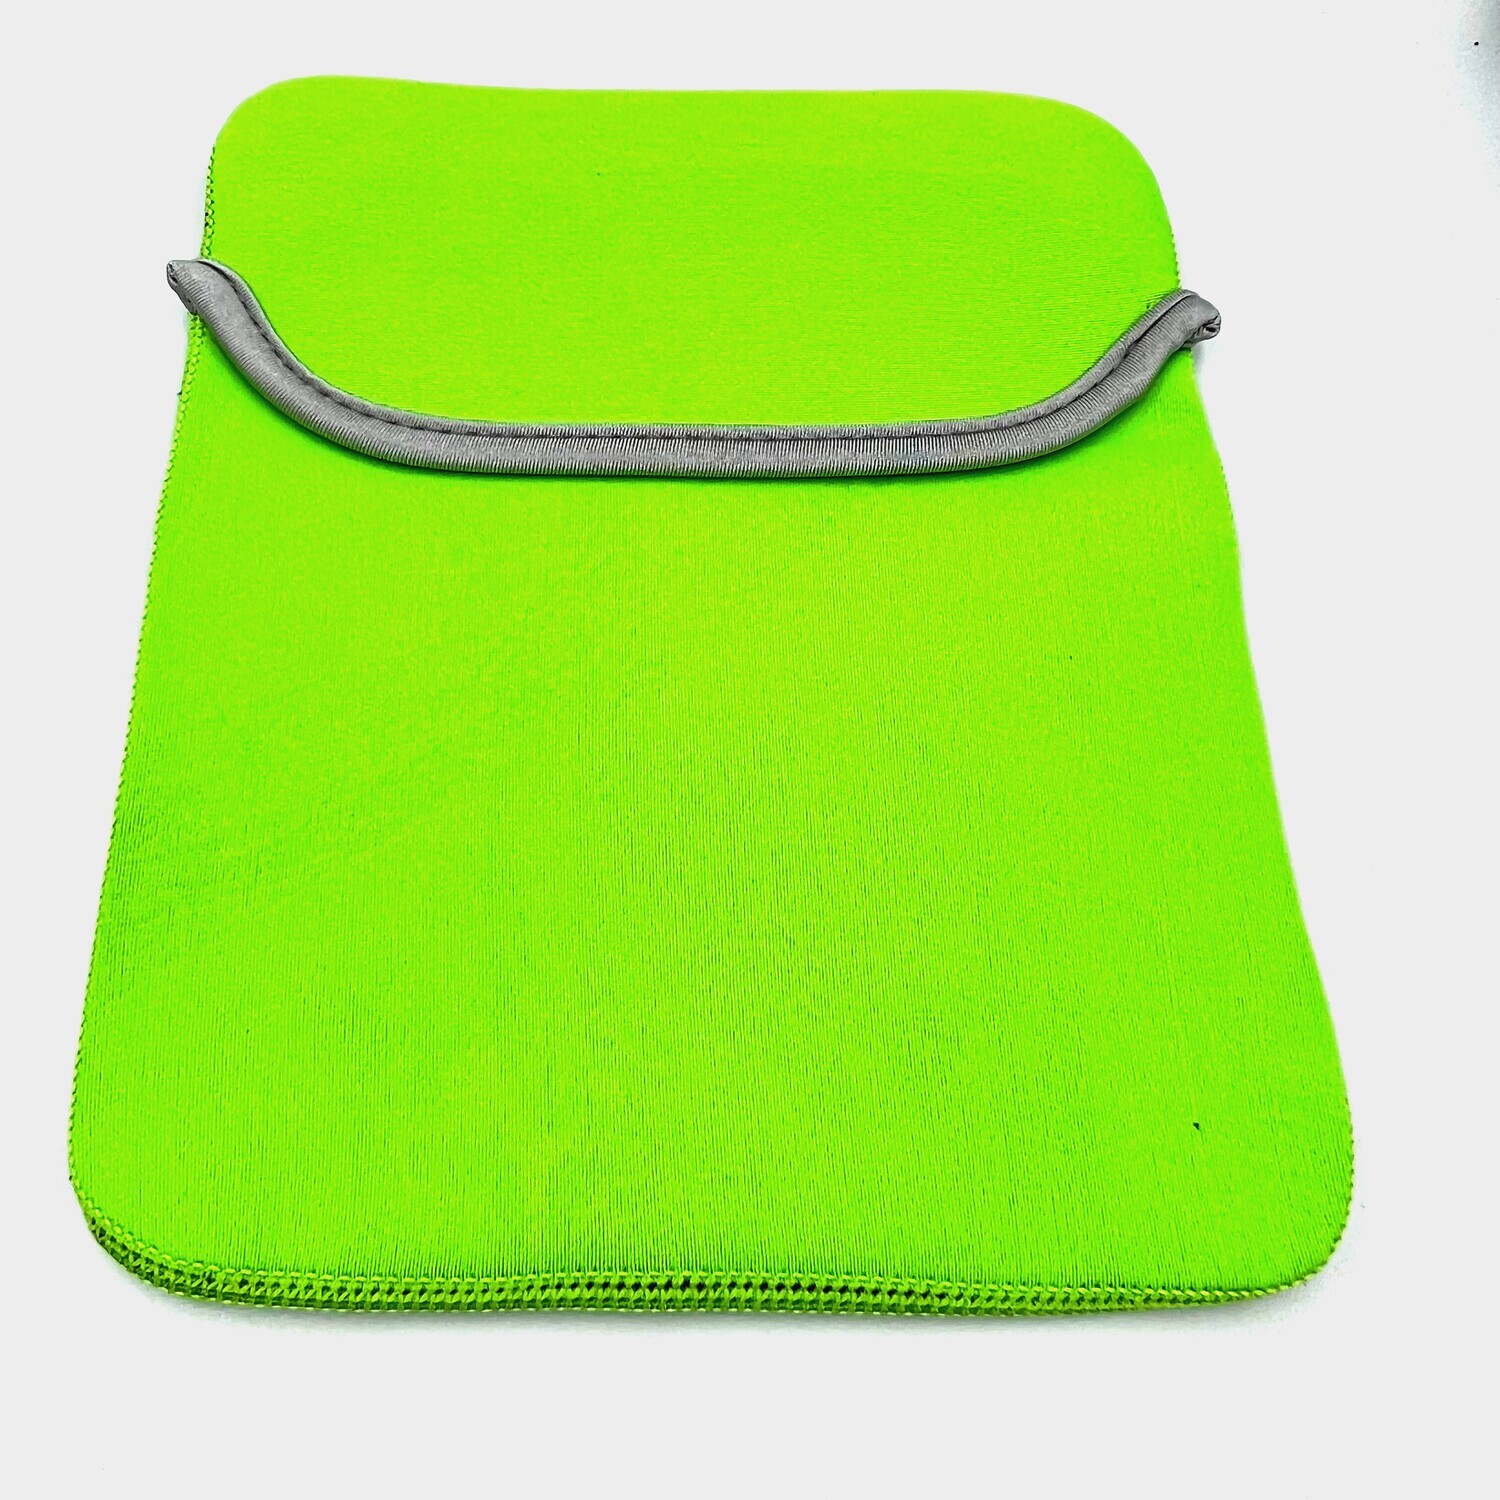 GoSelect 10" Tablet Sleeve Bag Green